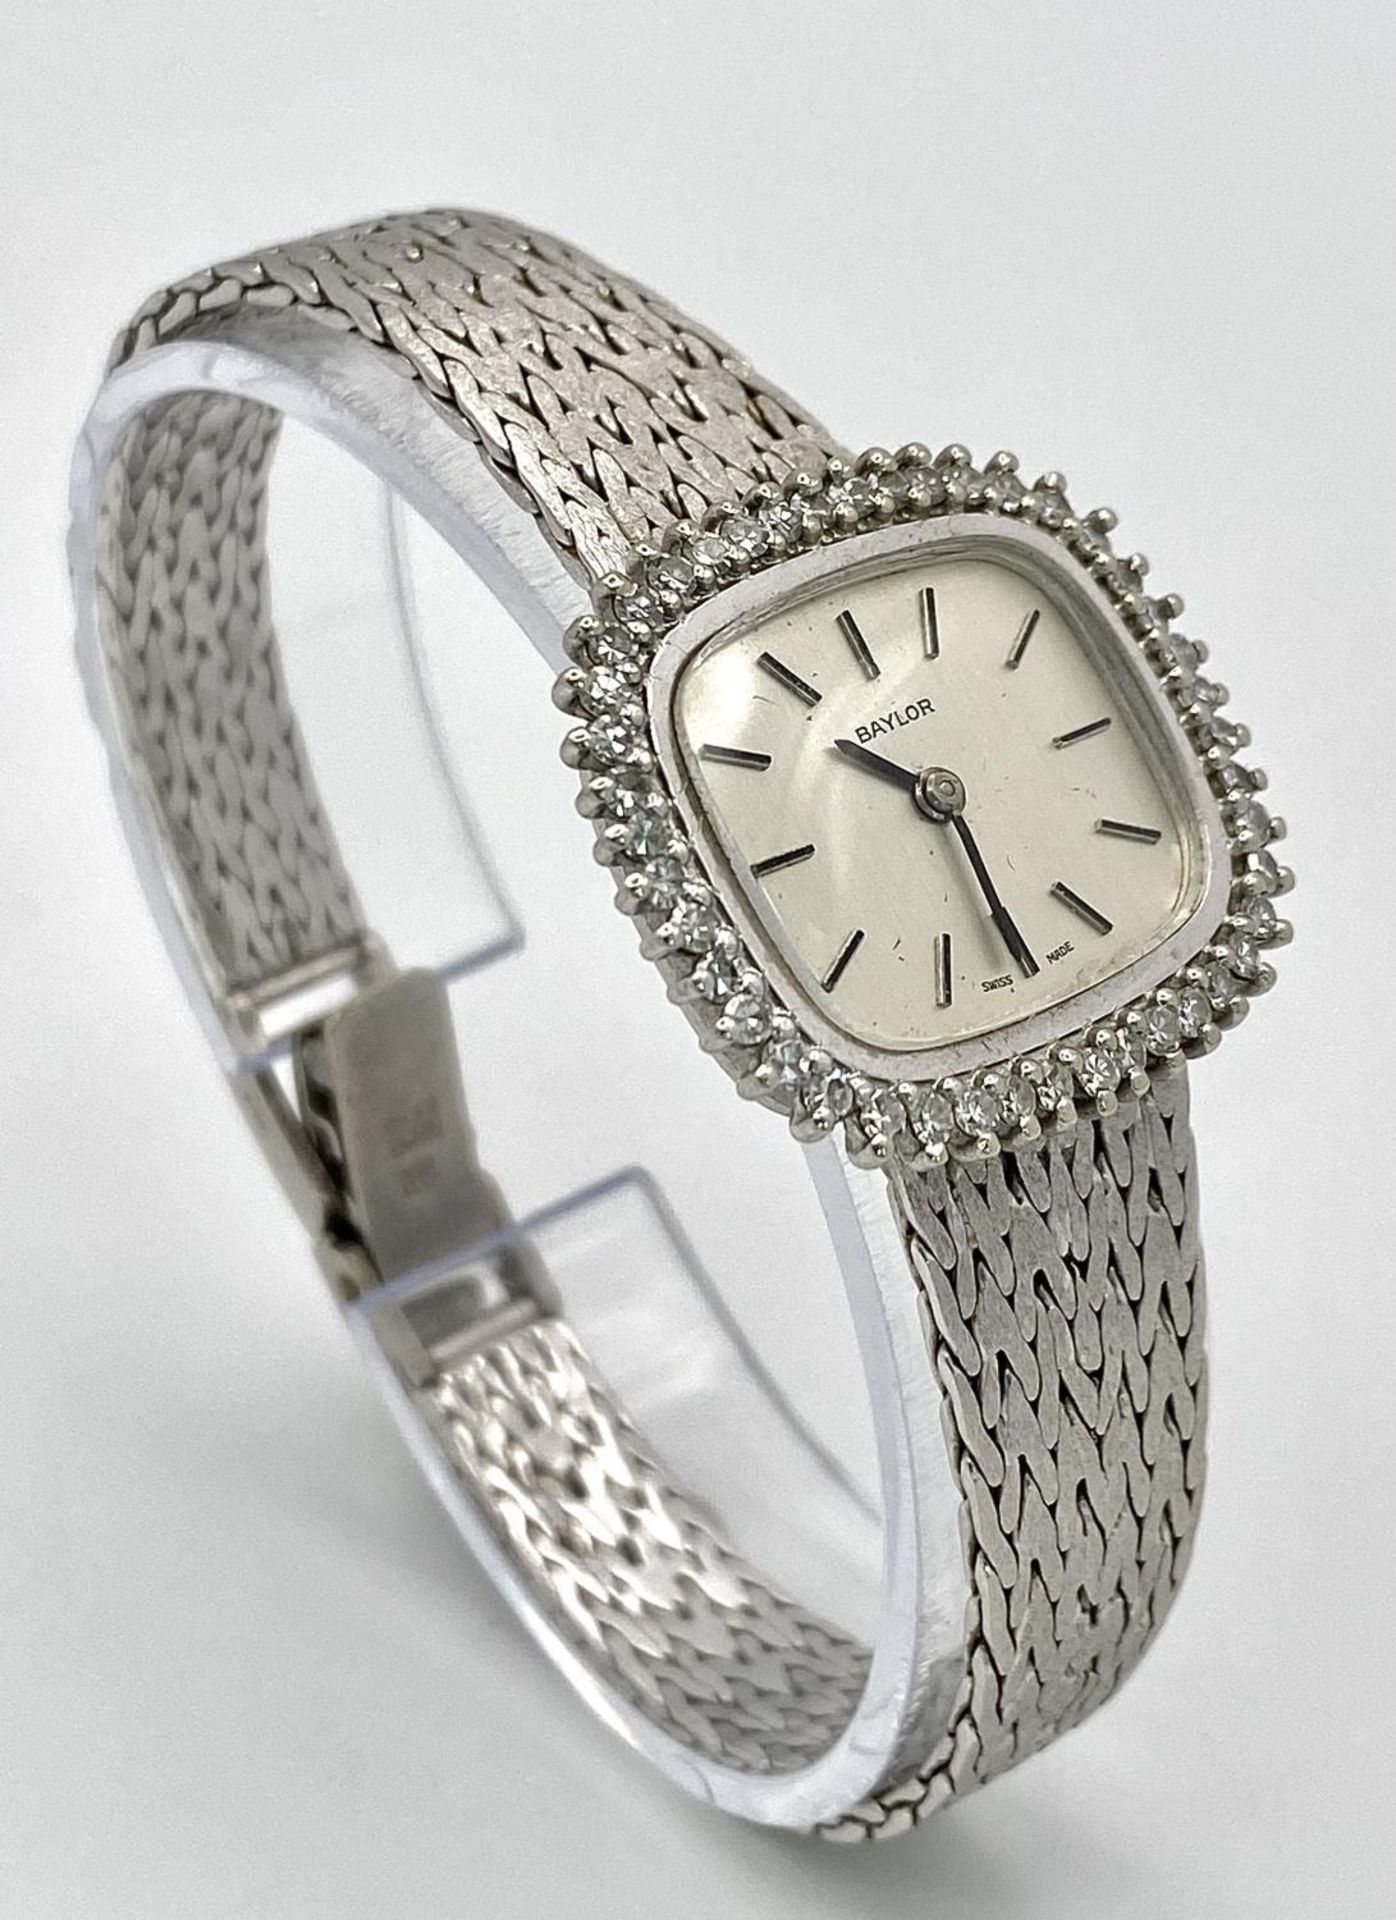 A Vintage Baylor 9K White Gold and Diamond Ladies Watch. 9k gold bracelet and case - 25mm. Diamond - Image 2 of 9